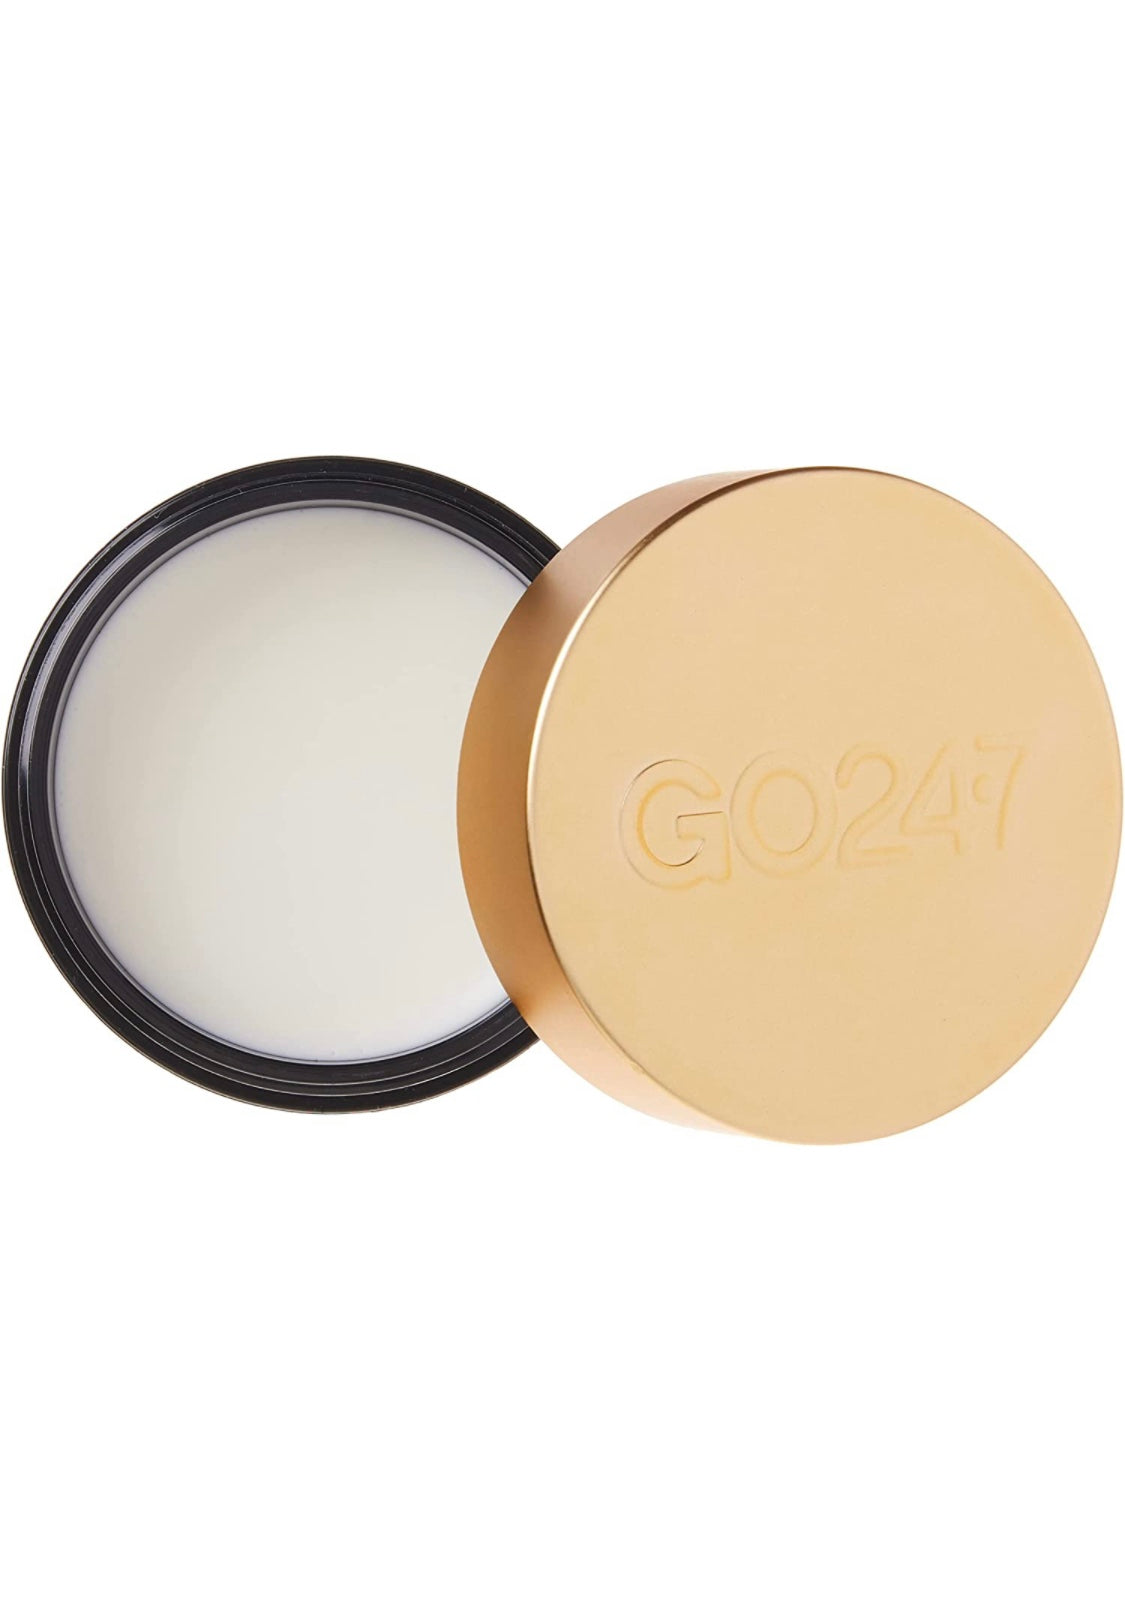 GO24*7 - Grooming cream 2 fl. oz. / 57 gr